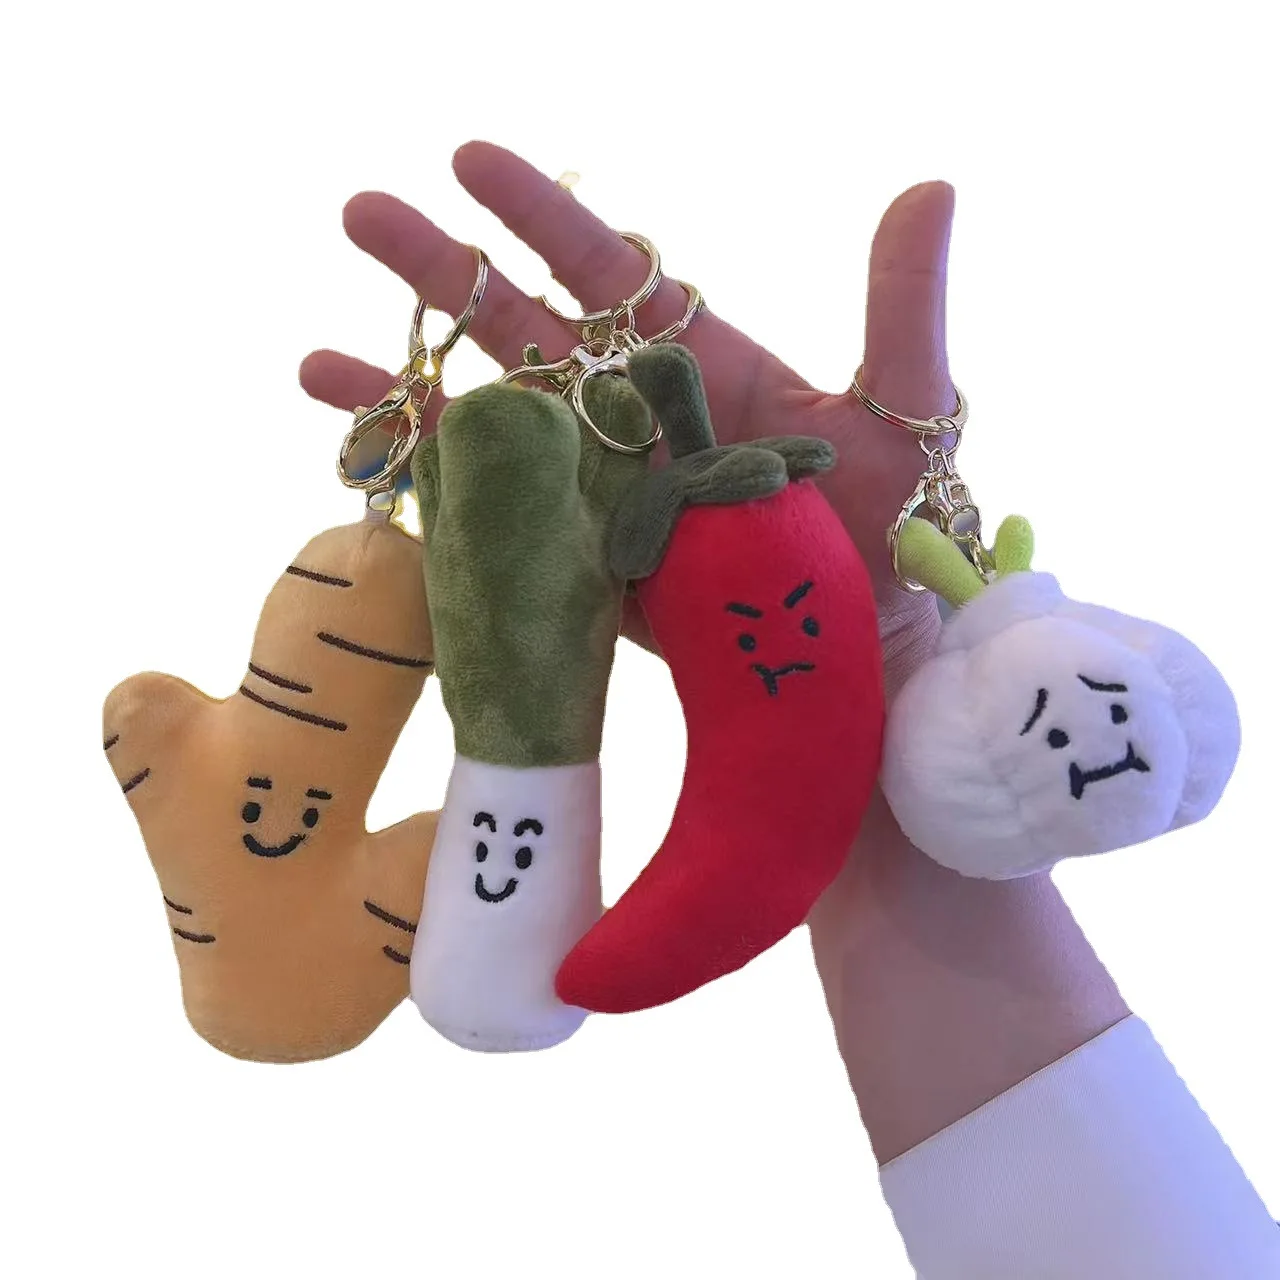 Wholesale fun vegetable plush toys hanging plush chili garlic keychain stuffed toy key chain